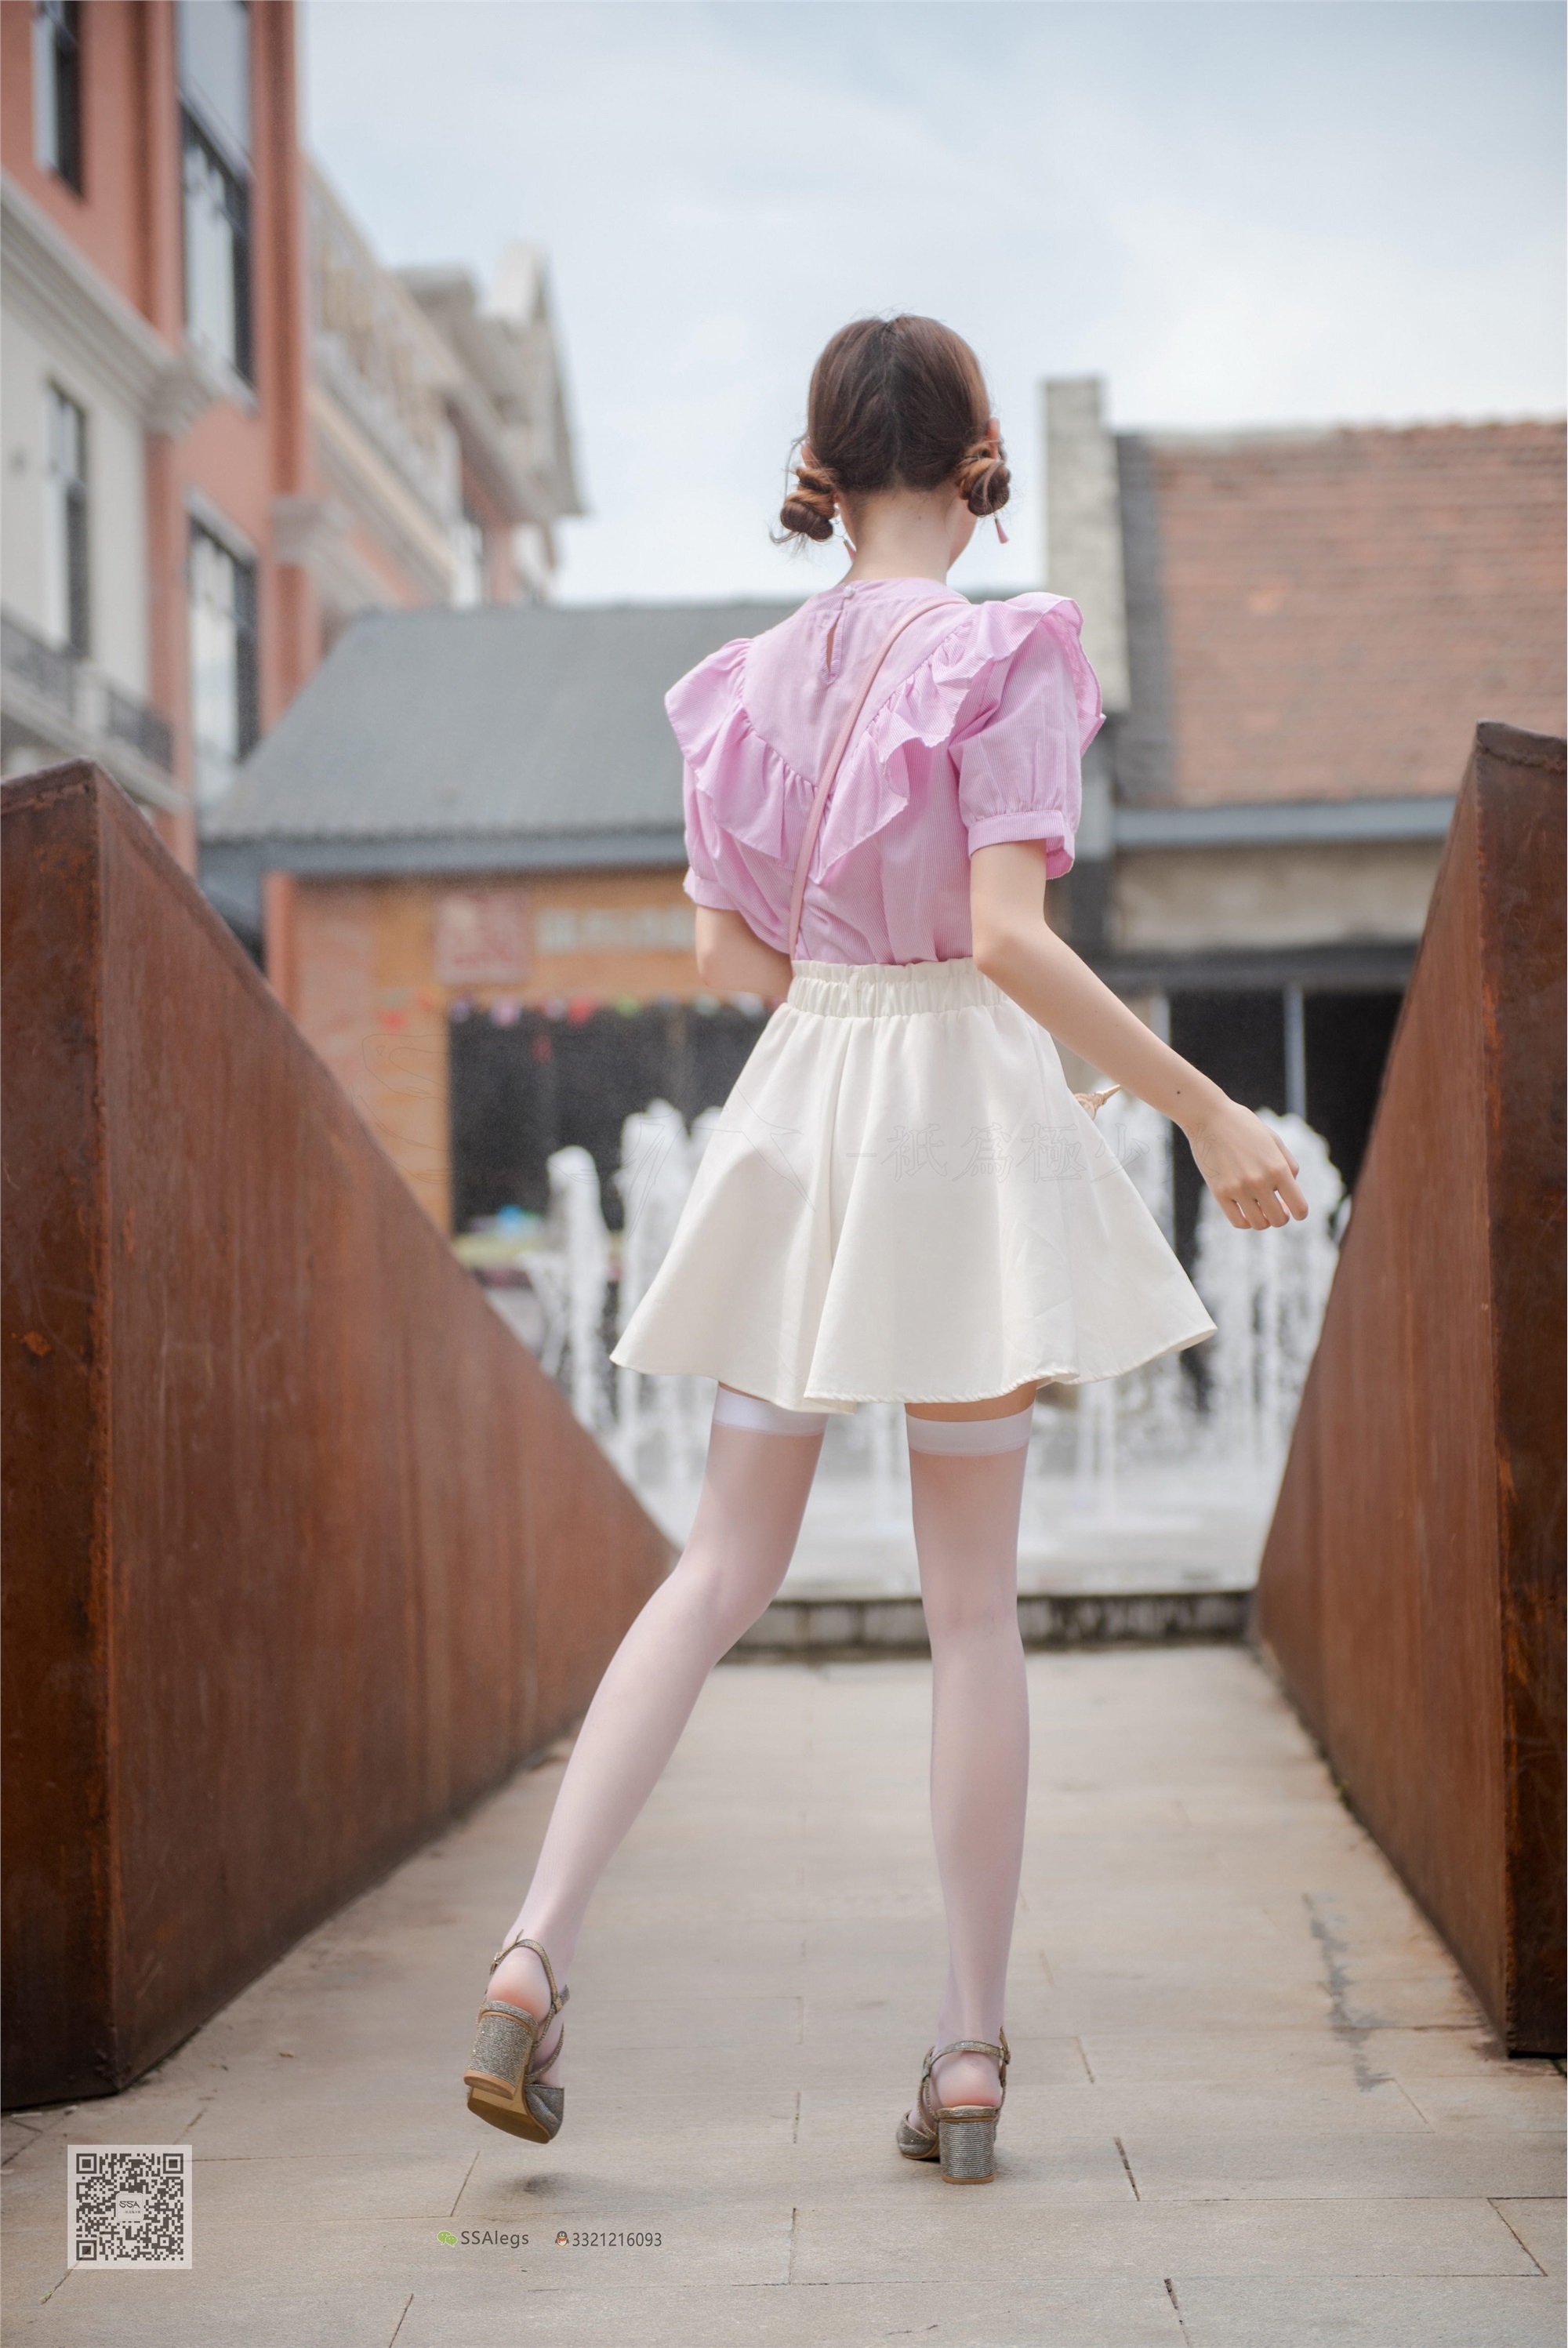 SSA silk society no.009 xiaoqiqi ultra thin 5D stockings Street Photo